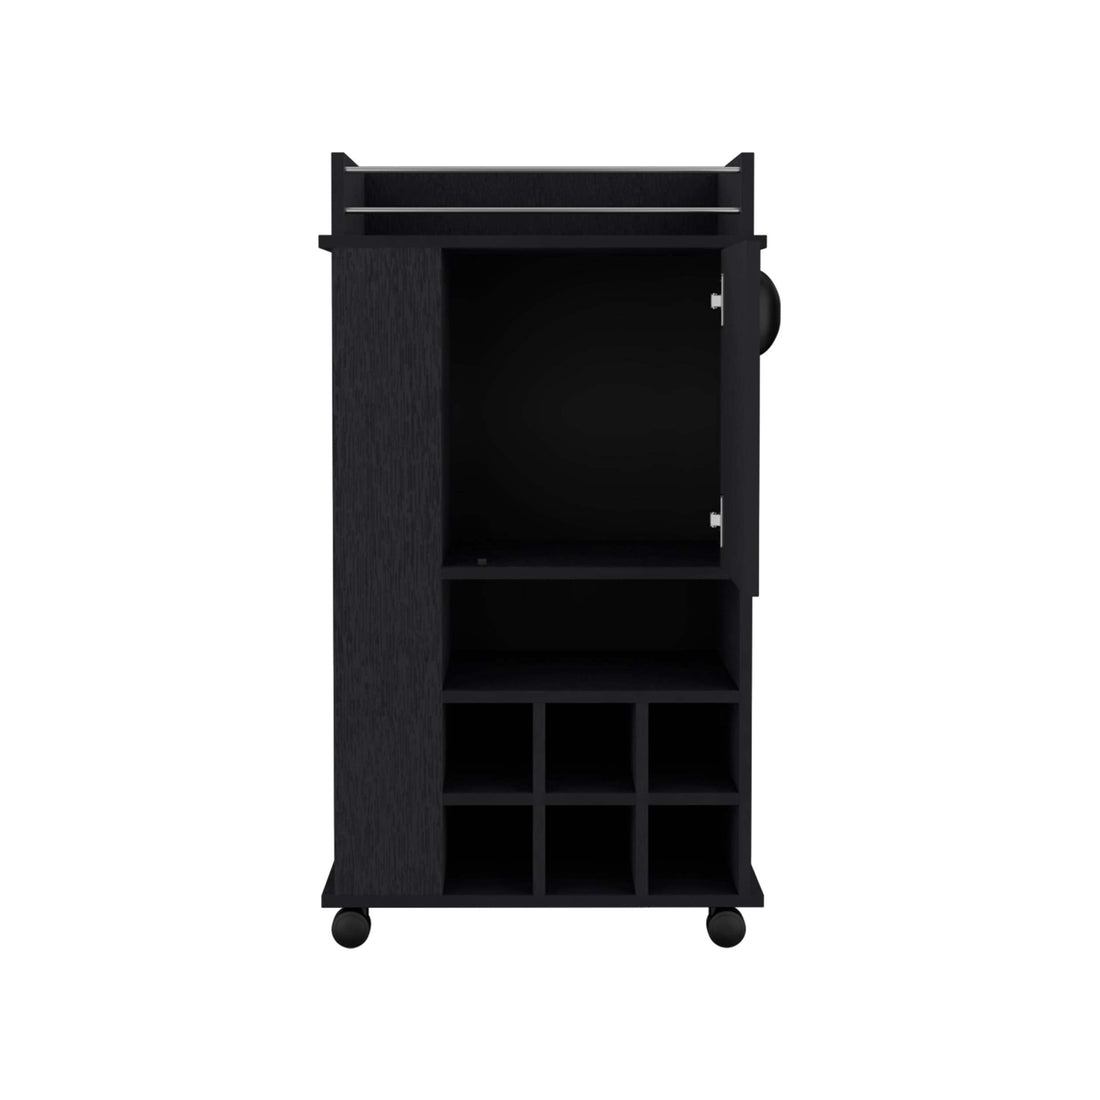 Black 4 Wheel Bar Cart Cabinet For Kitchen Or